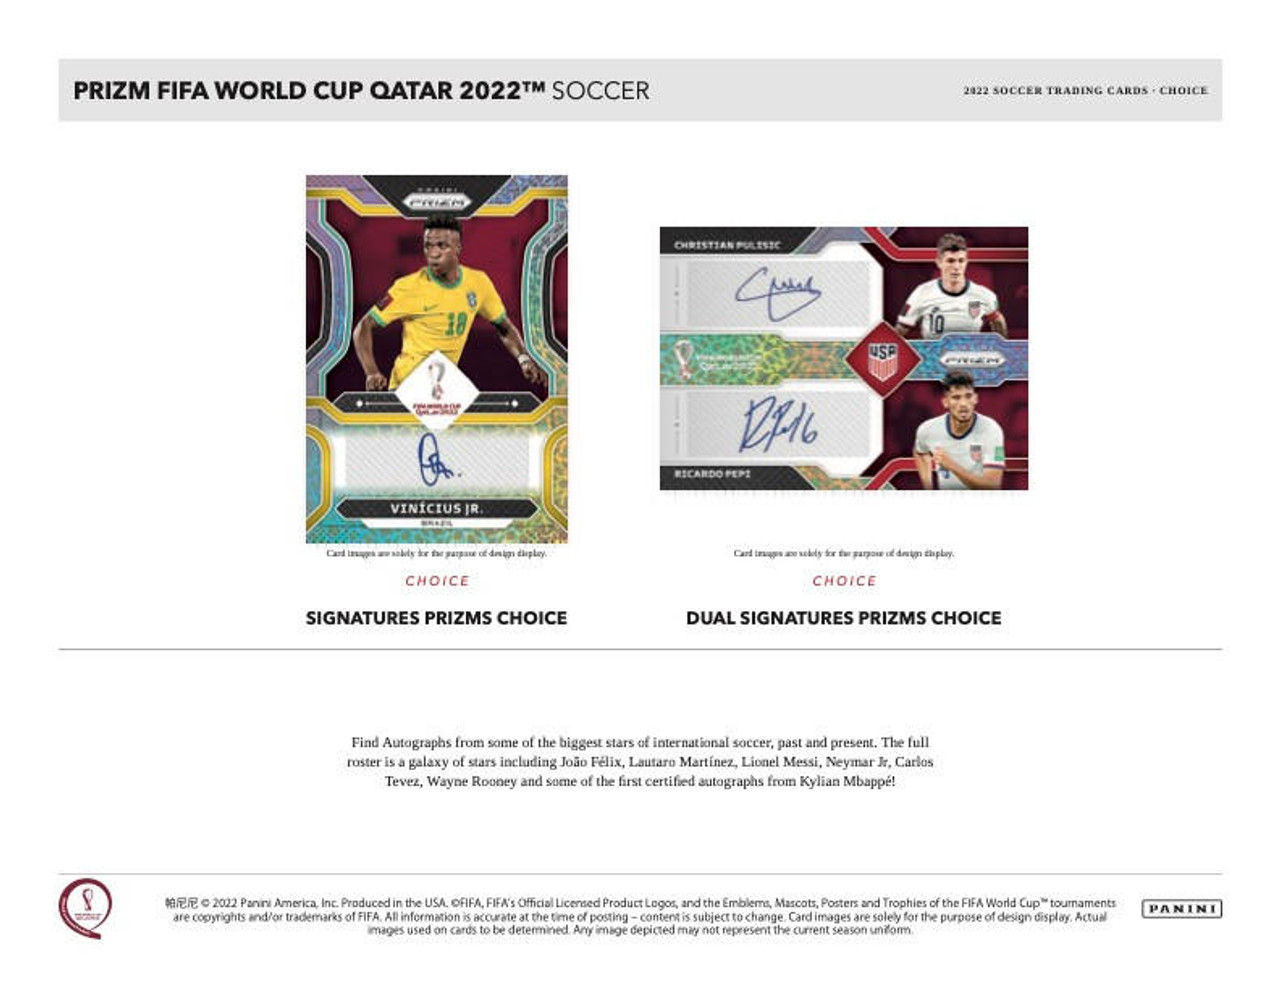 2022 Qatar Panini Prizm World Cup Soccer Blaster Box - 24 Cards